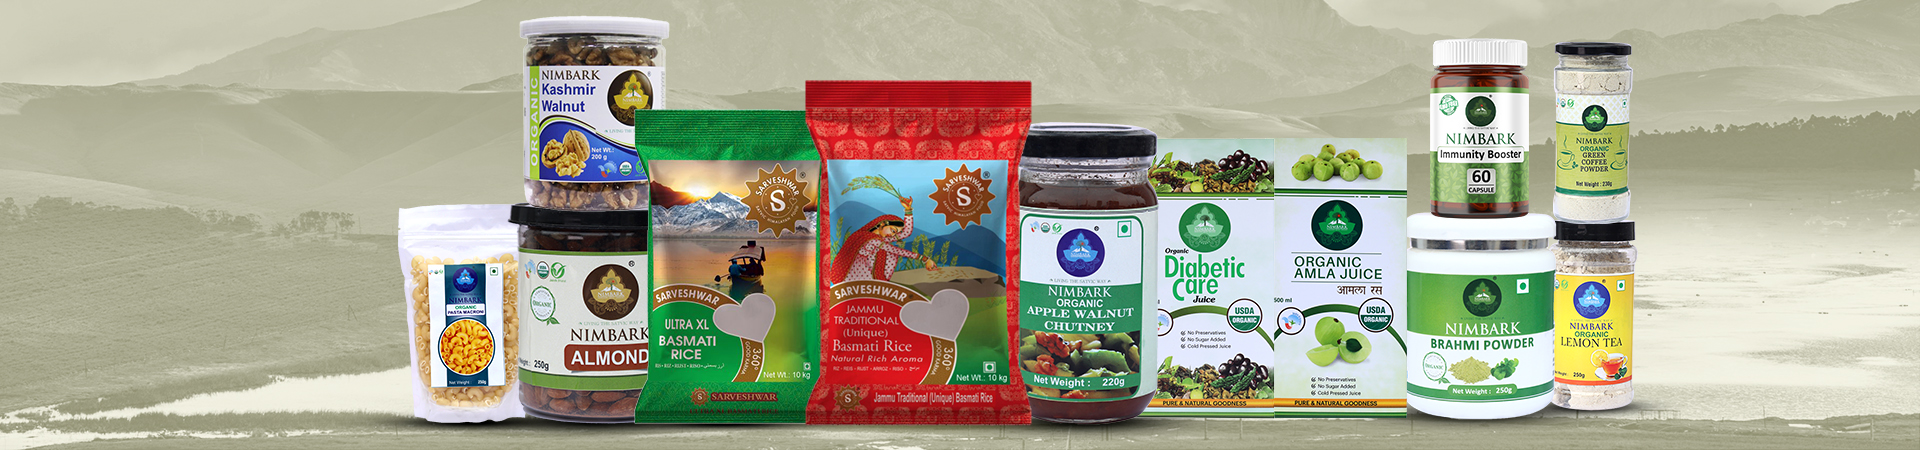 Best Organic food Brand in India